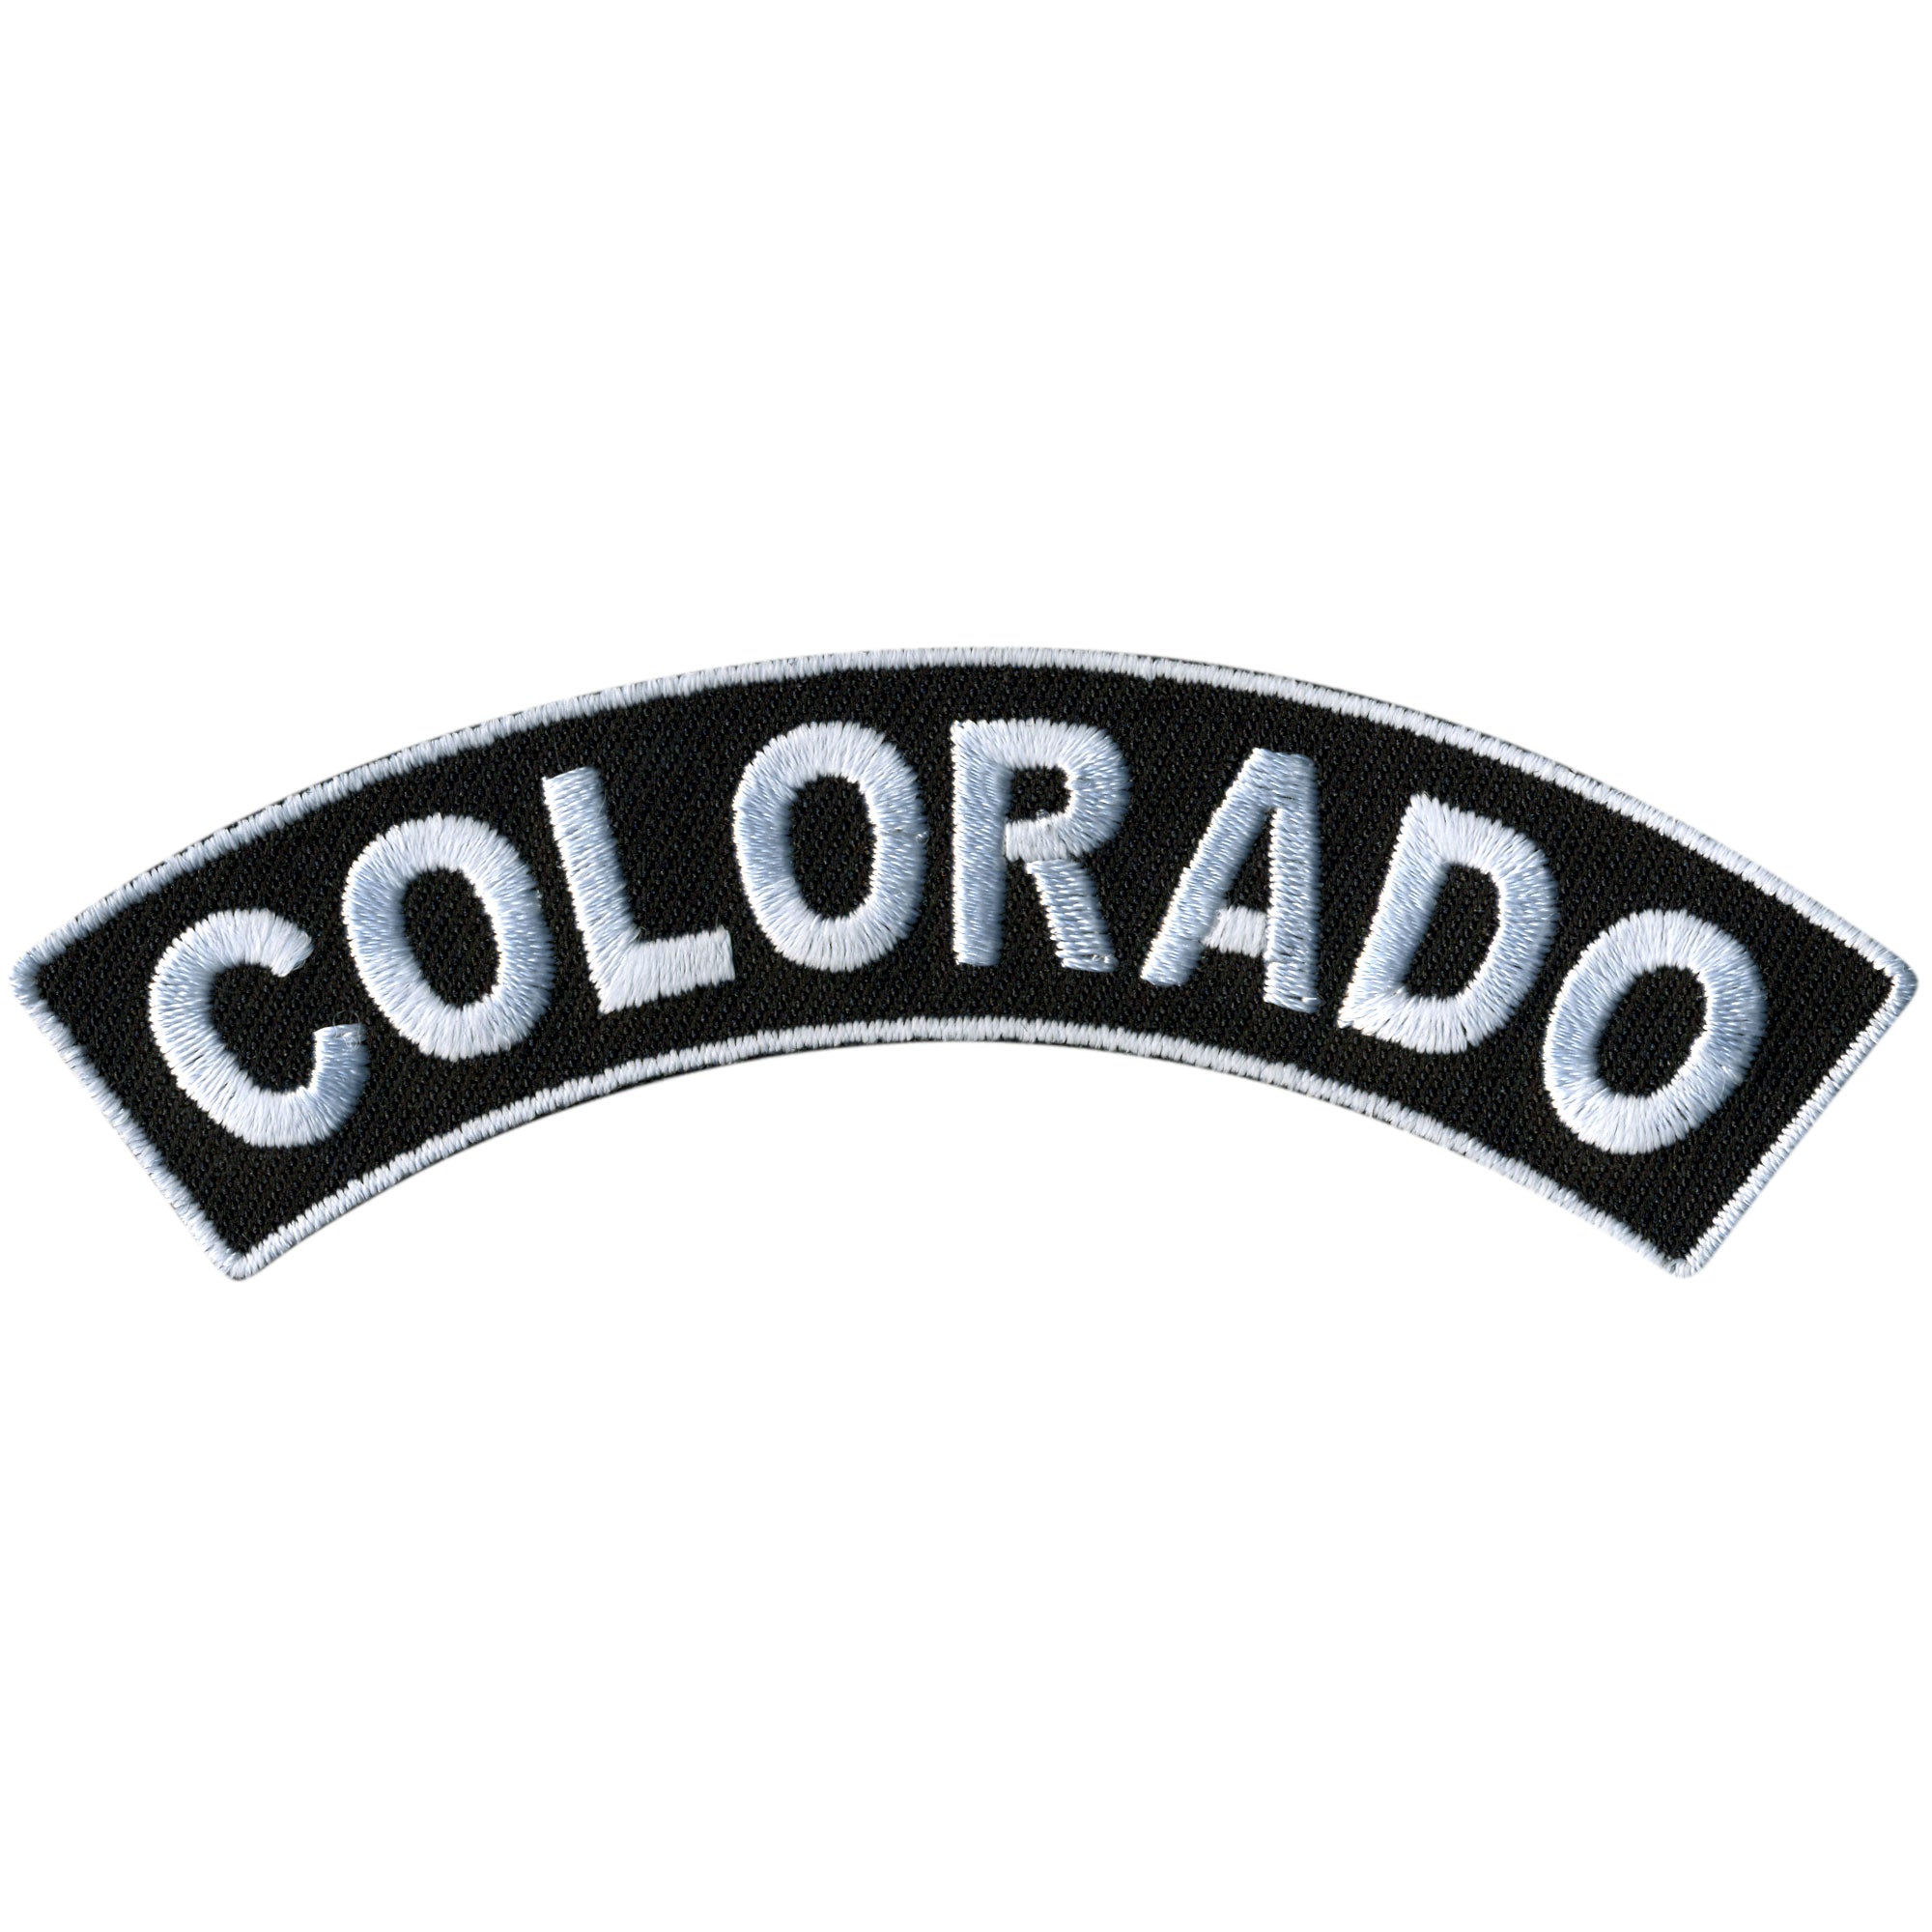 Hot Leathers Colorado 4” X 1” Top Rocker Patch